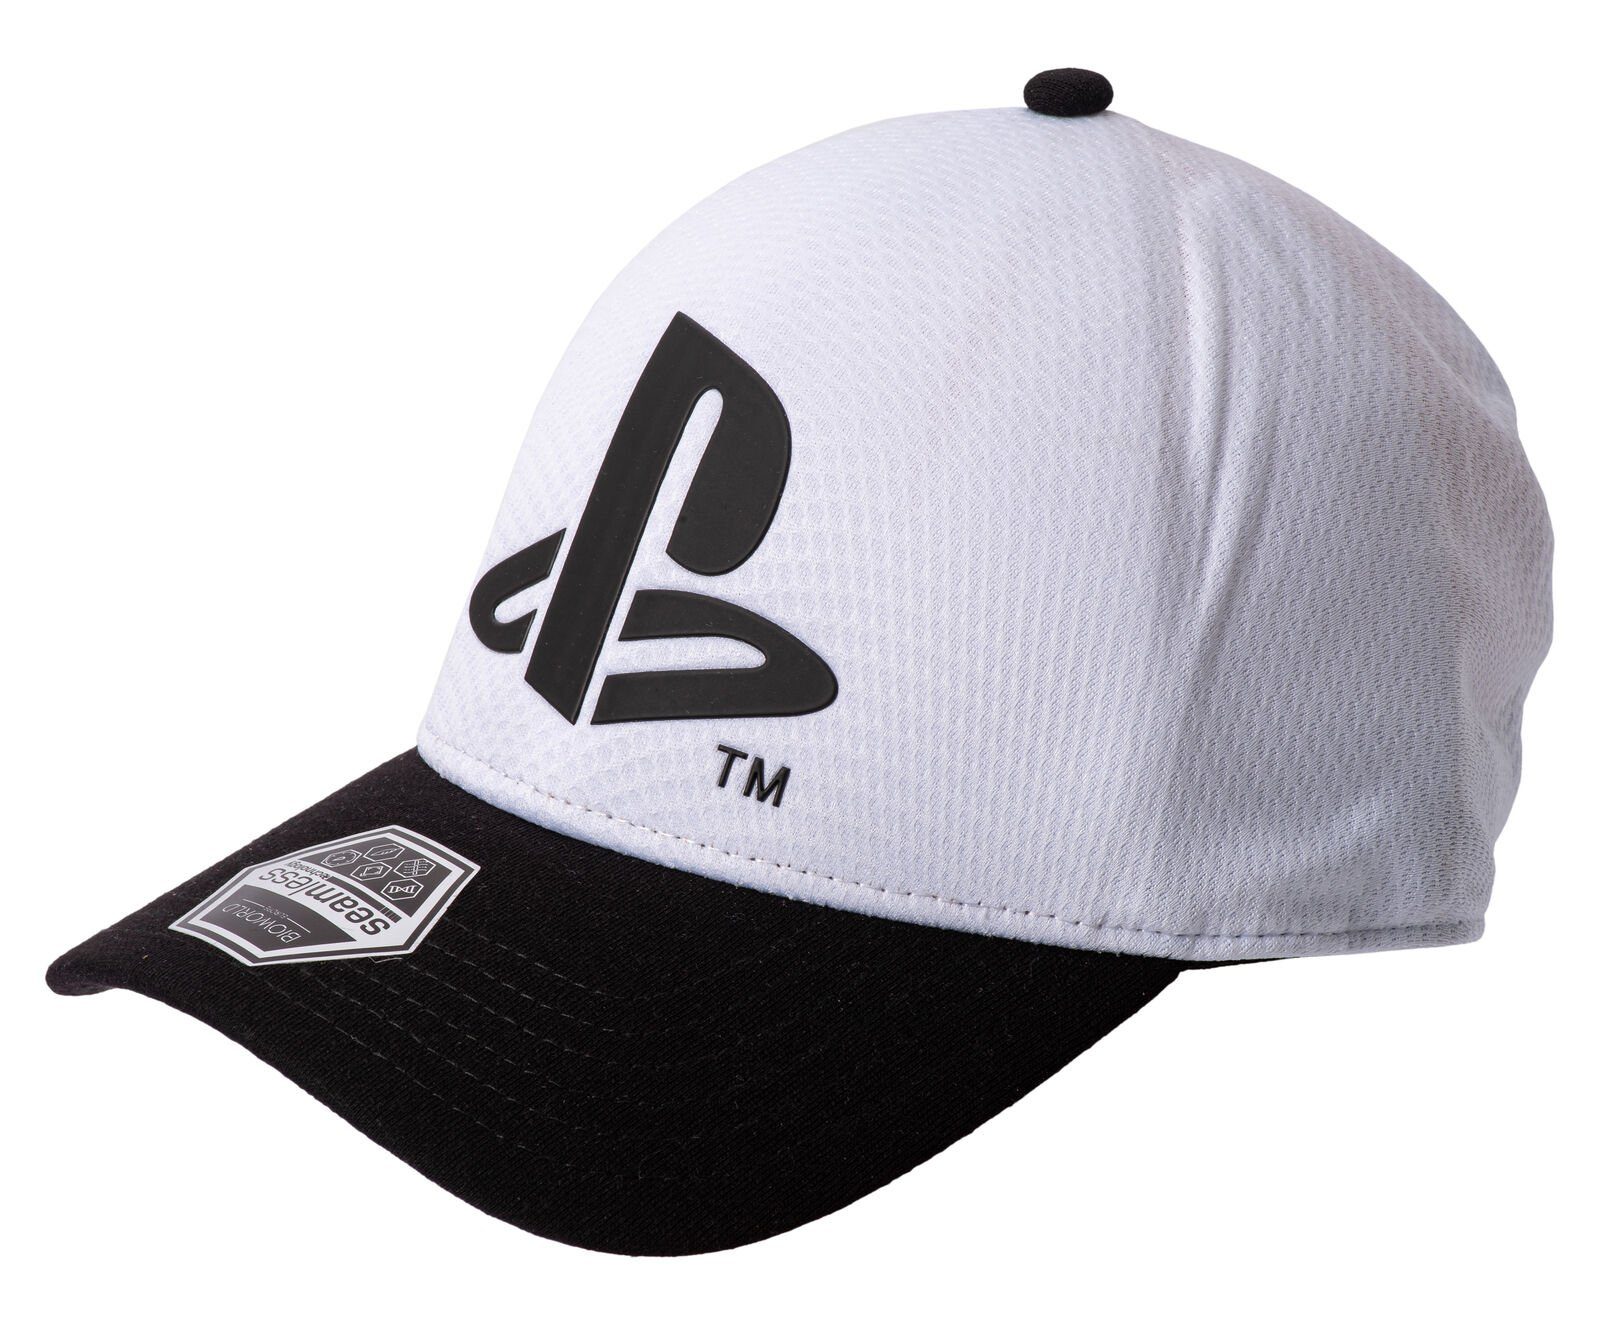 Baseballcap Baseball weiß PS5 - schwarz PLAYSTATION PS4 Cappy Cap Playstation Schirmmütze Gaming